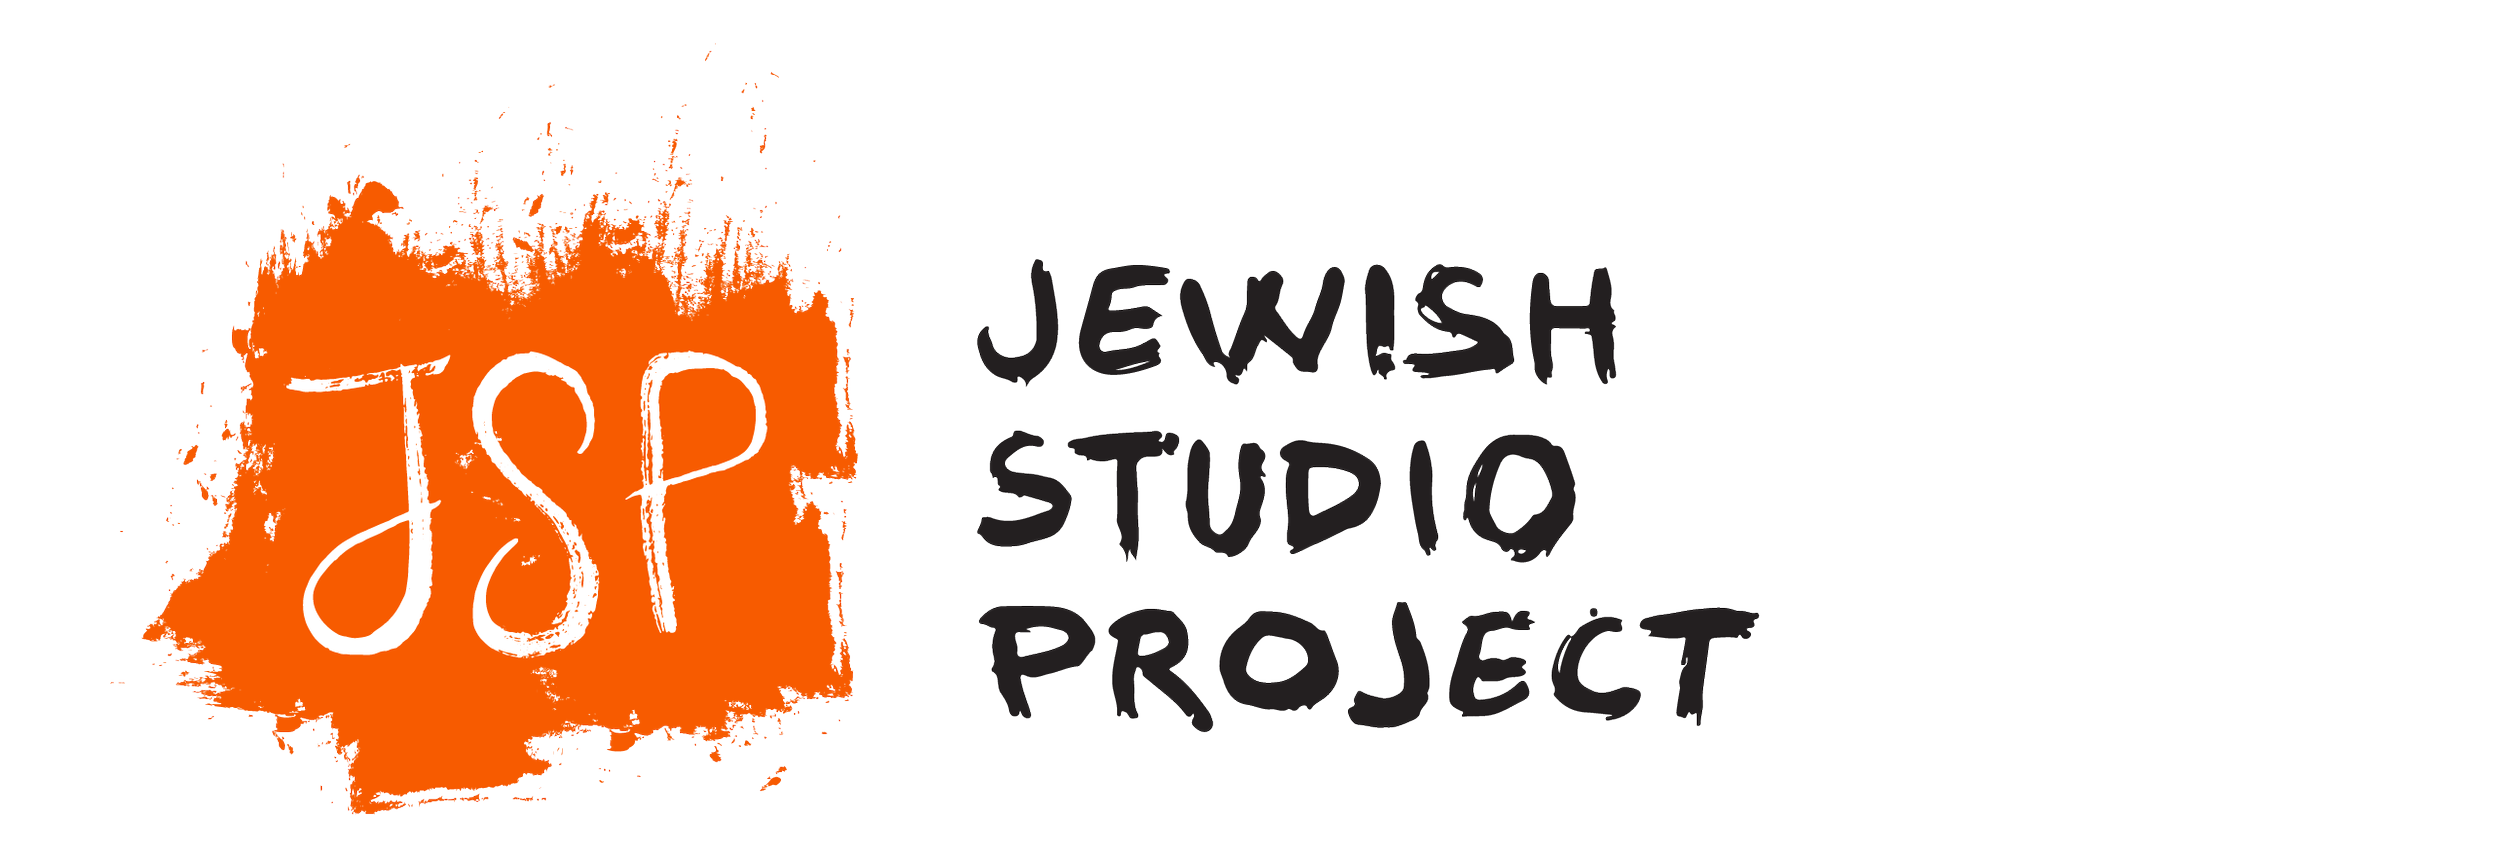 Jewish Studio Project.png